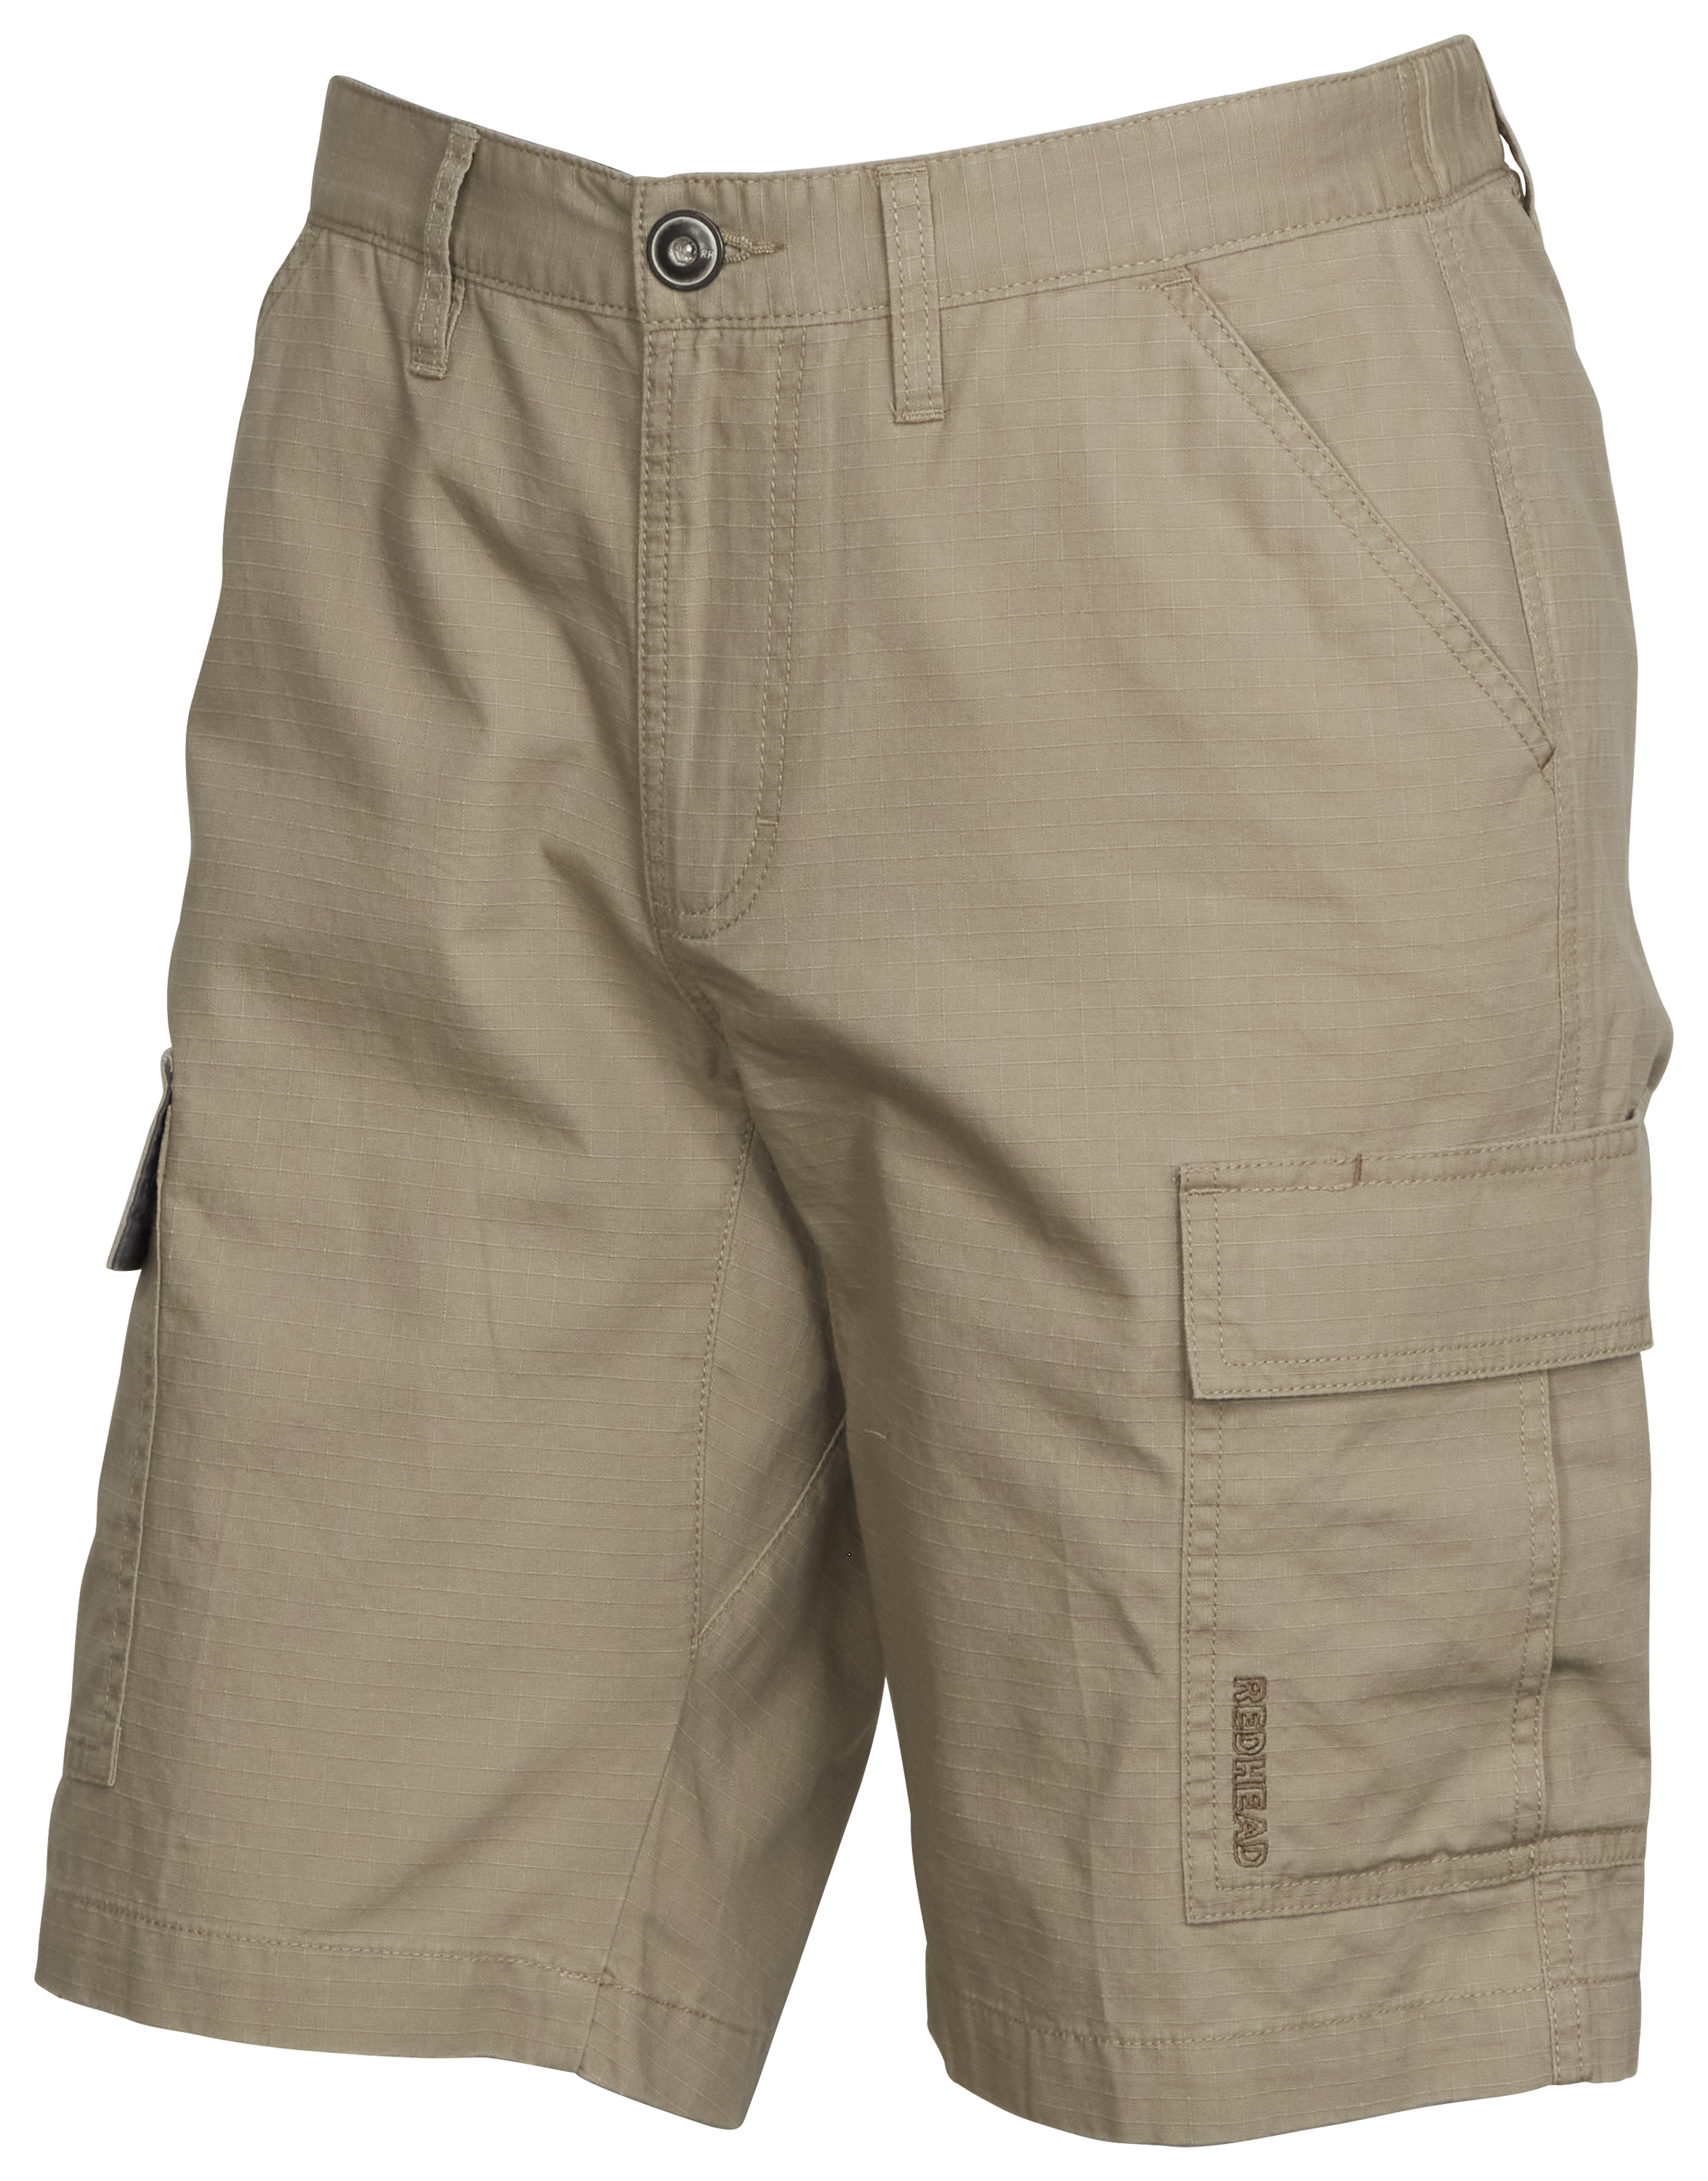 Redhead Stockton Cargo Shorts for Men - Khaki - 46